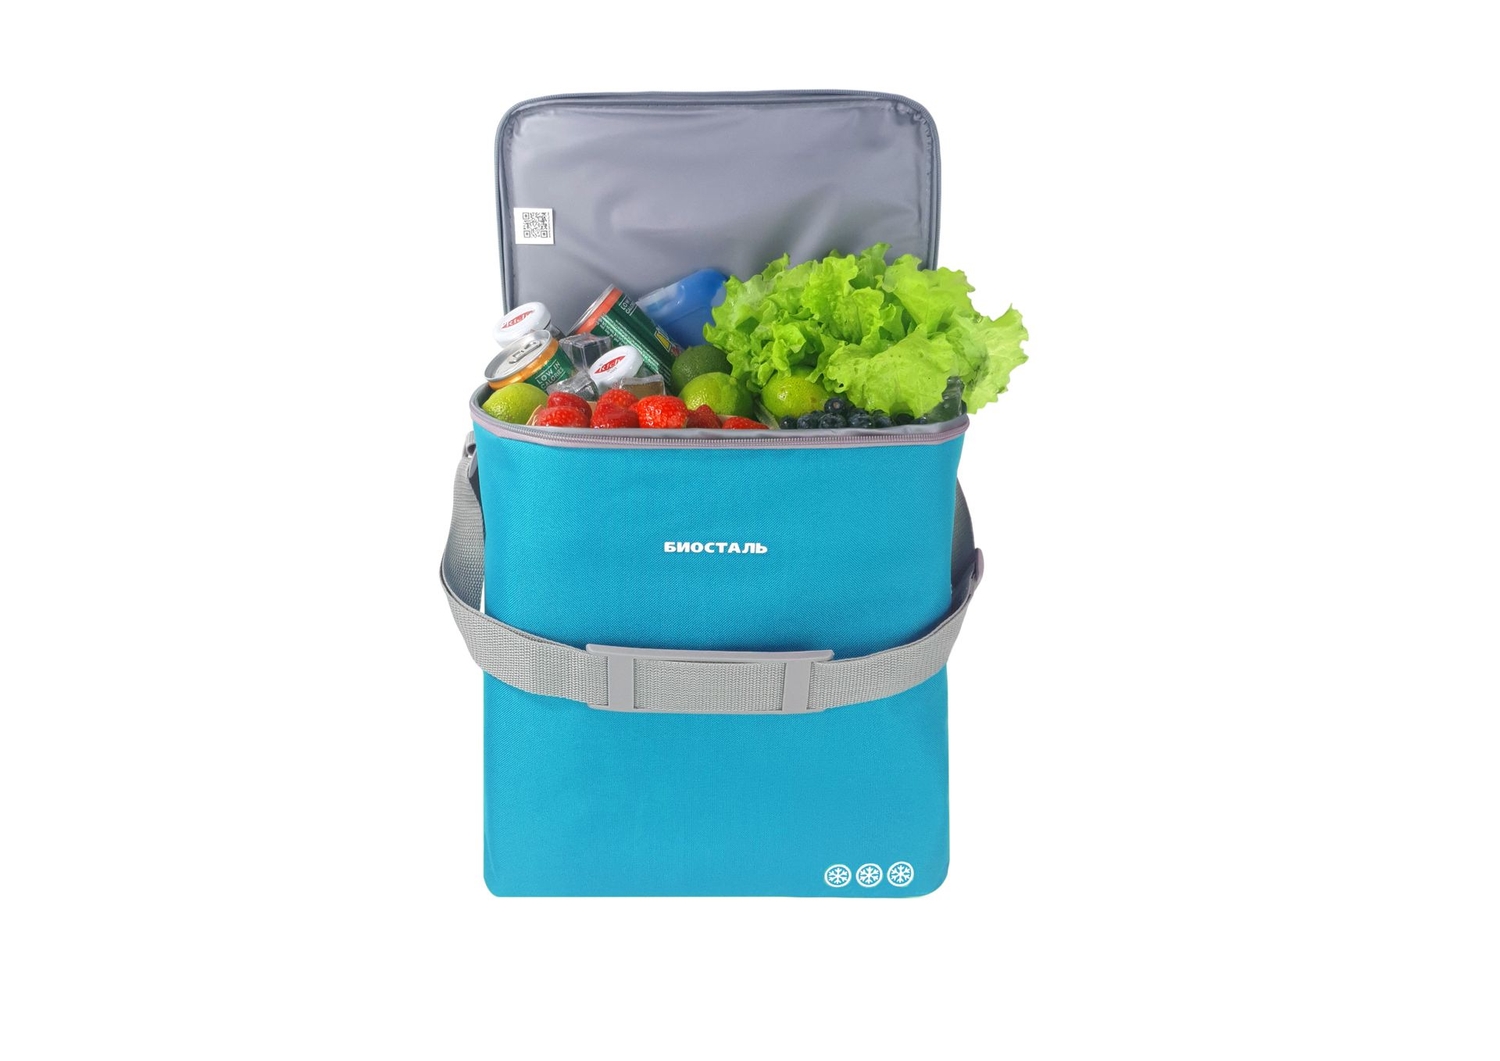 Термосумка (сумка-холодильник) Biostal Кантри (20 л.), синяя сумка холодильник кантри цвет лазурный 20л tcd 20b